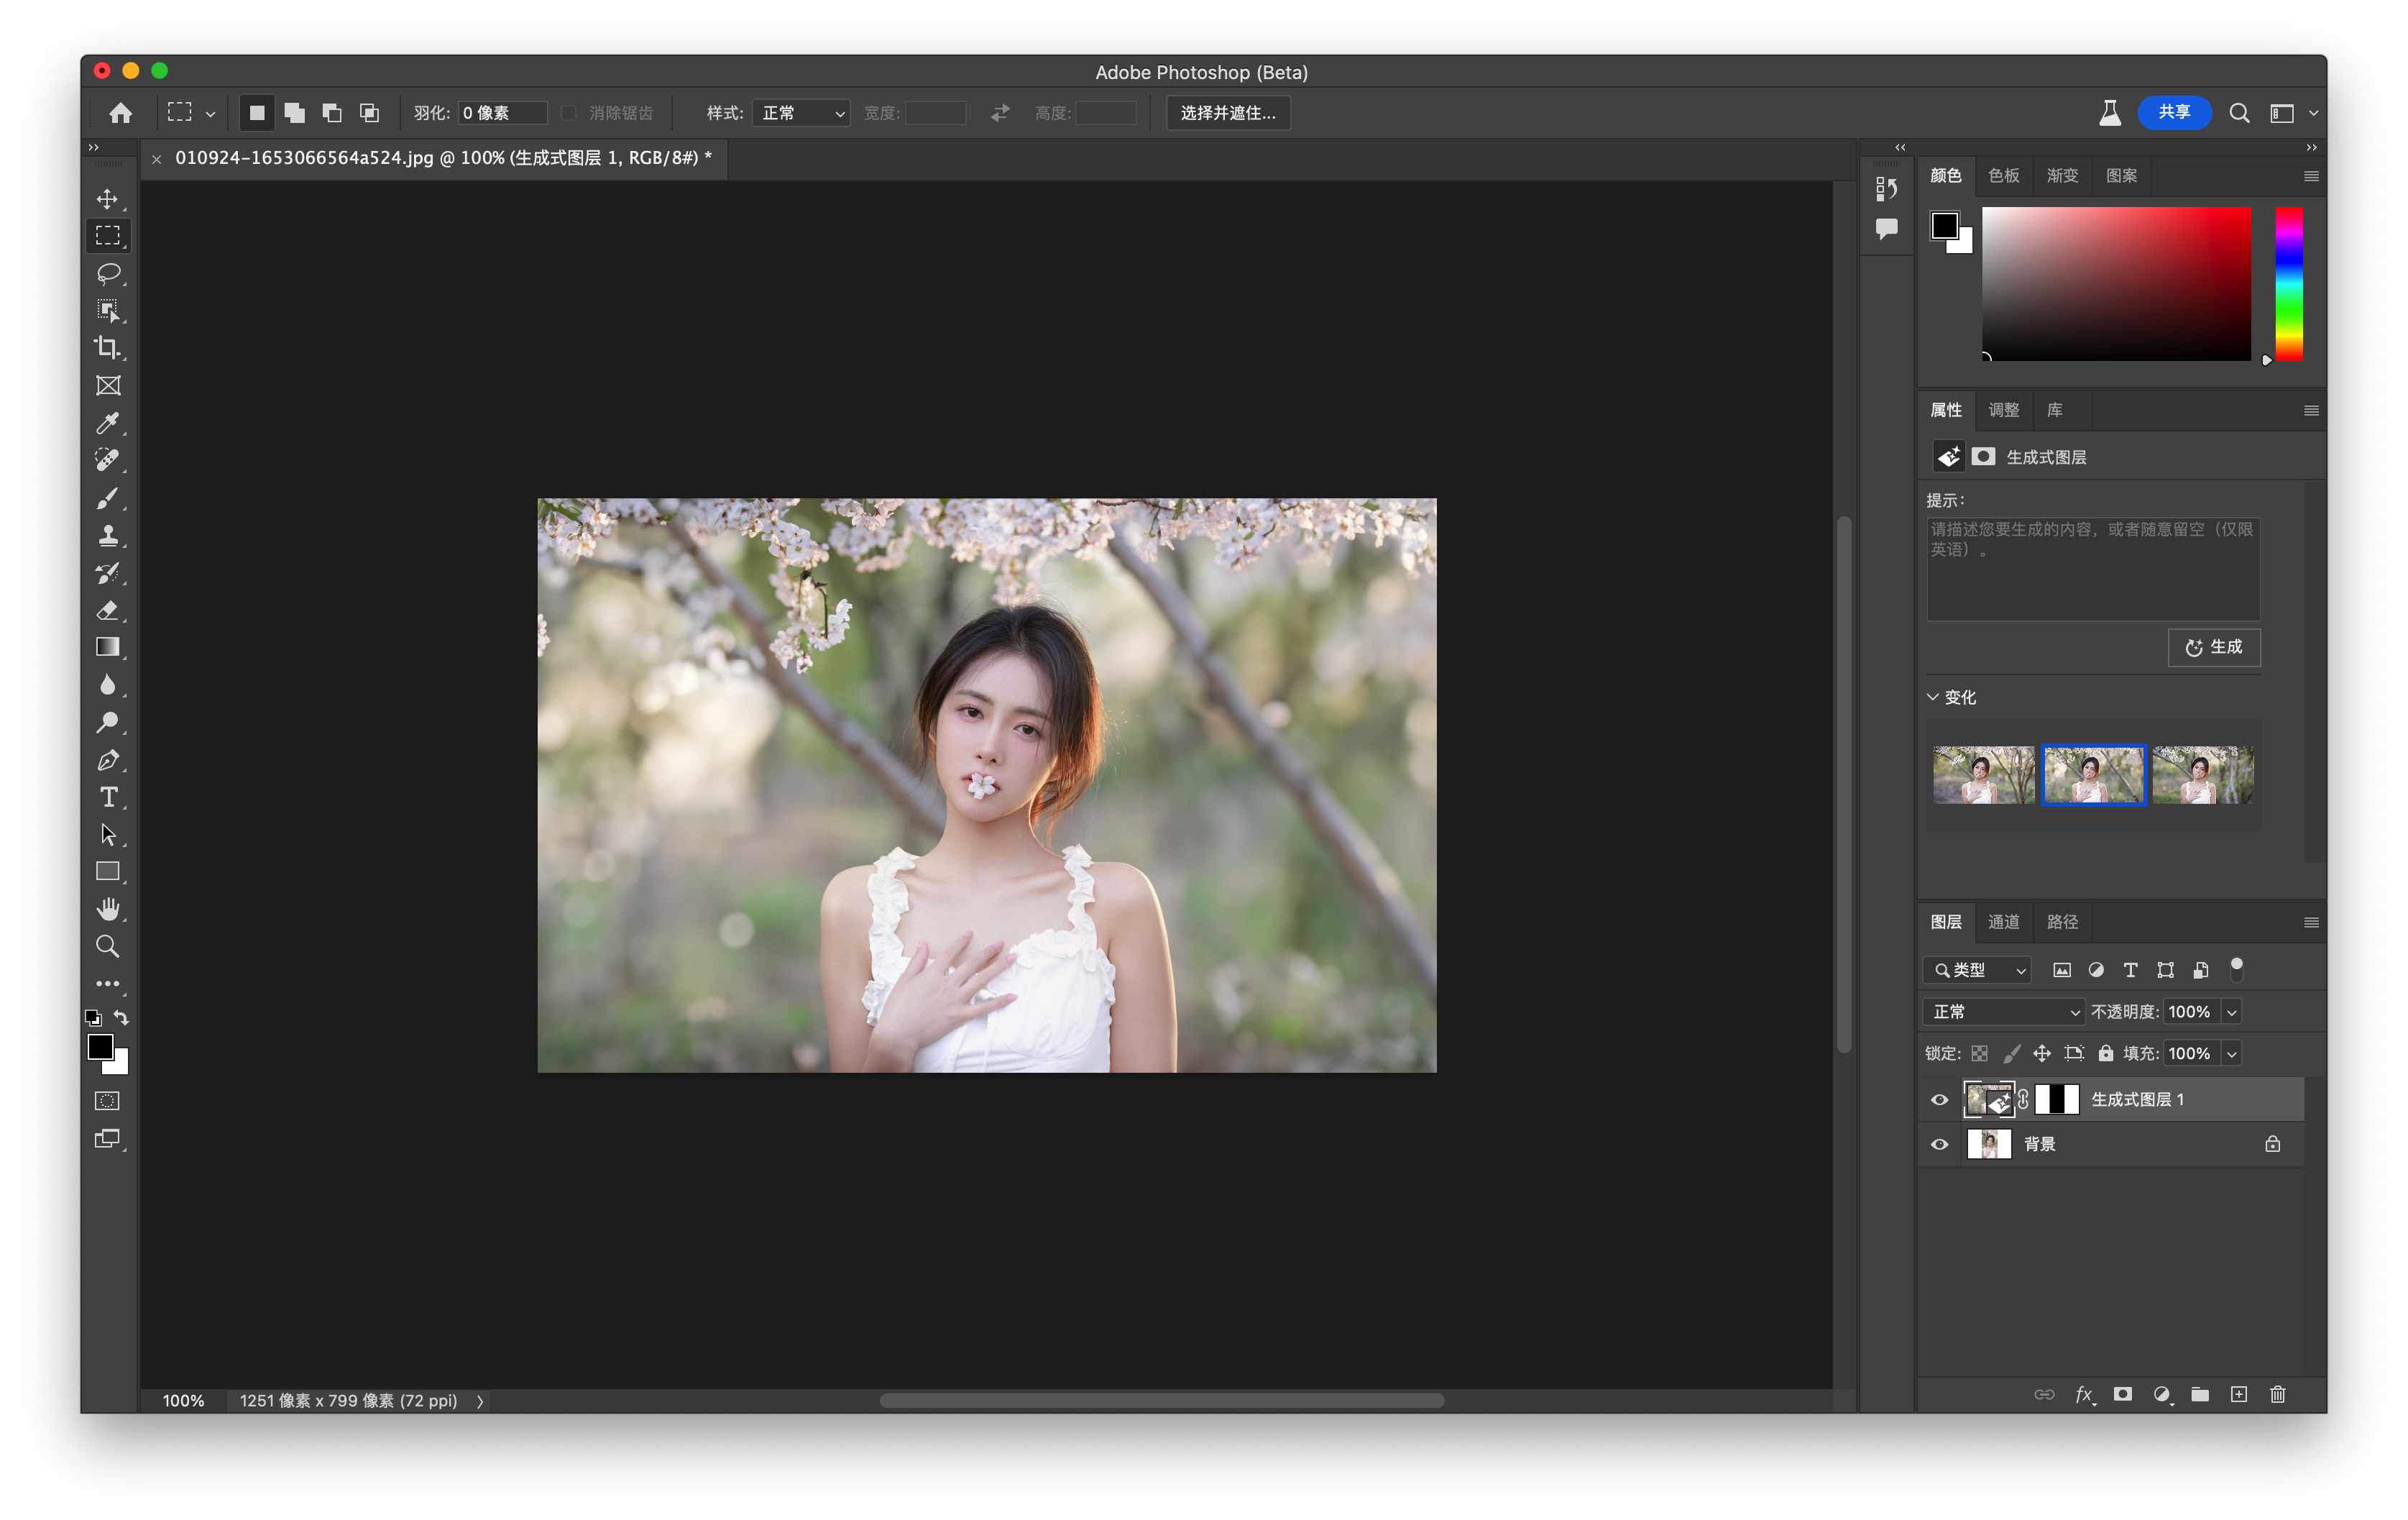 Adobe Photoshop 2023 for Mac v24.6 Beta 中文激活版 intel/M1通用(ps2023) 🌍支持多语言安装！支持神经滤镜 Neural Filters